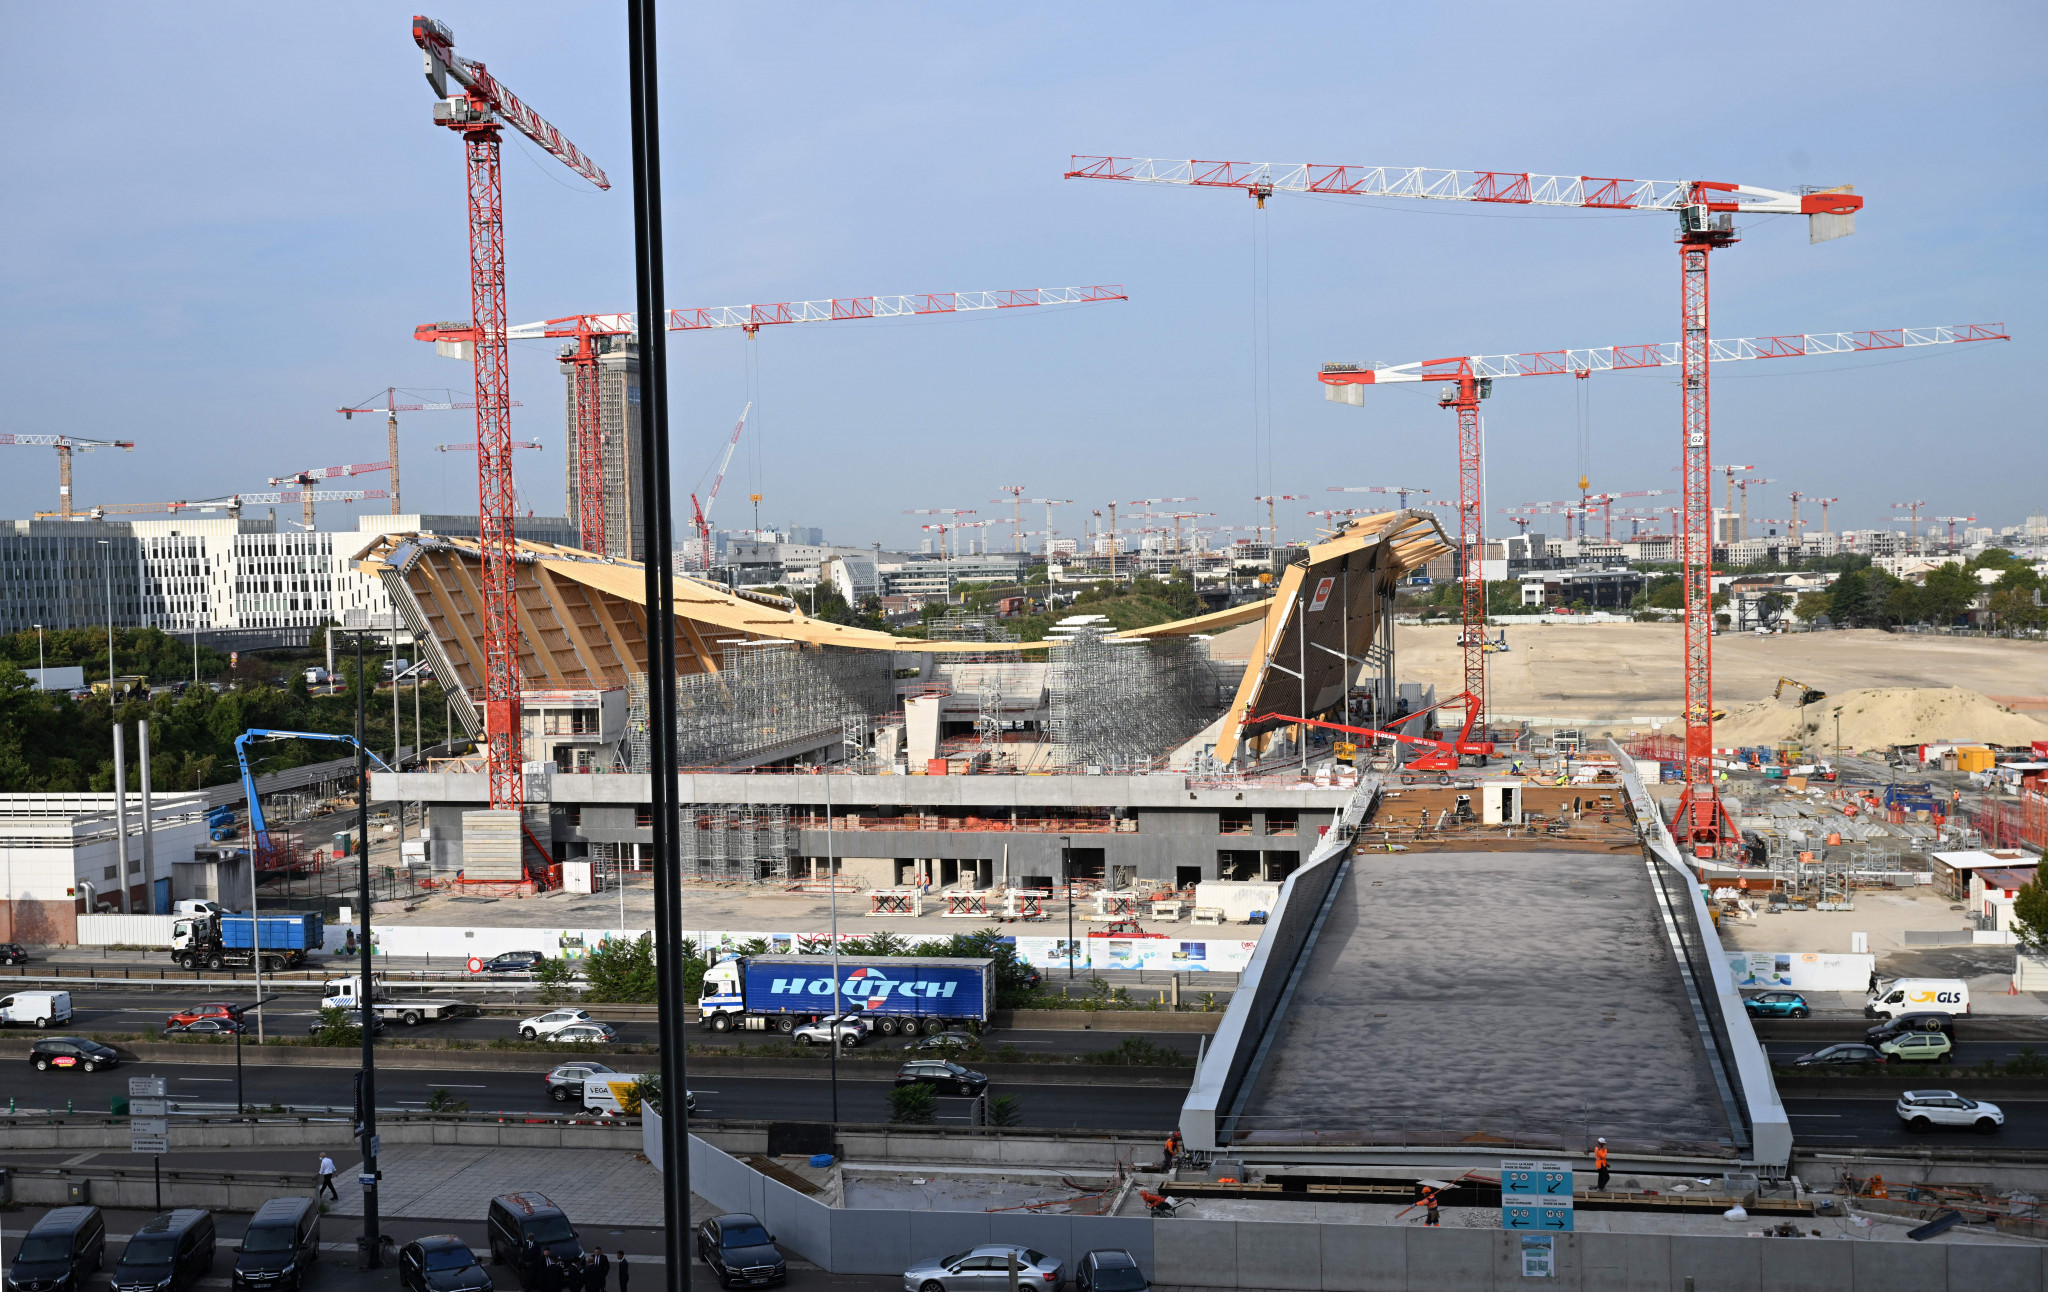 Paris 2024 approves Olympic Aquatic Centre as Main Press Centre for Paralympics